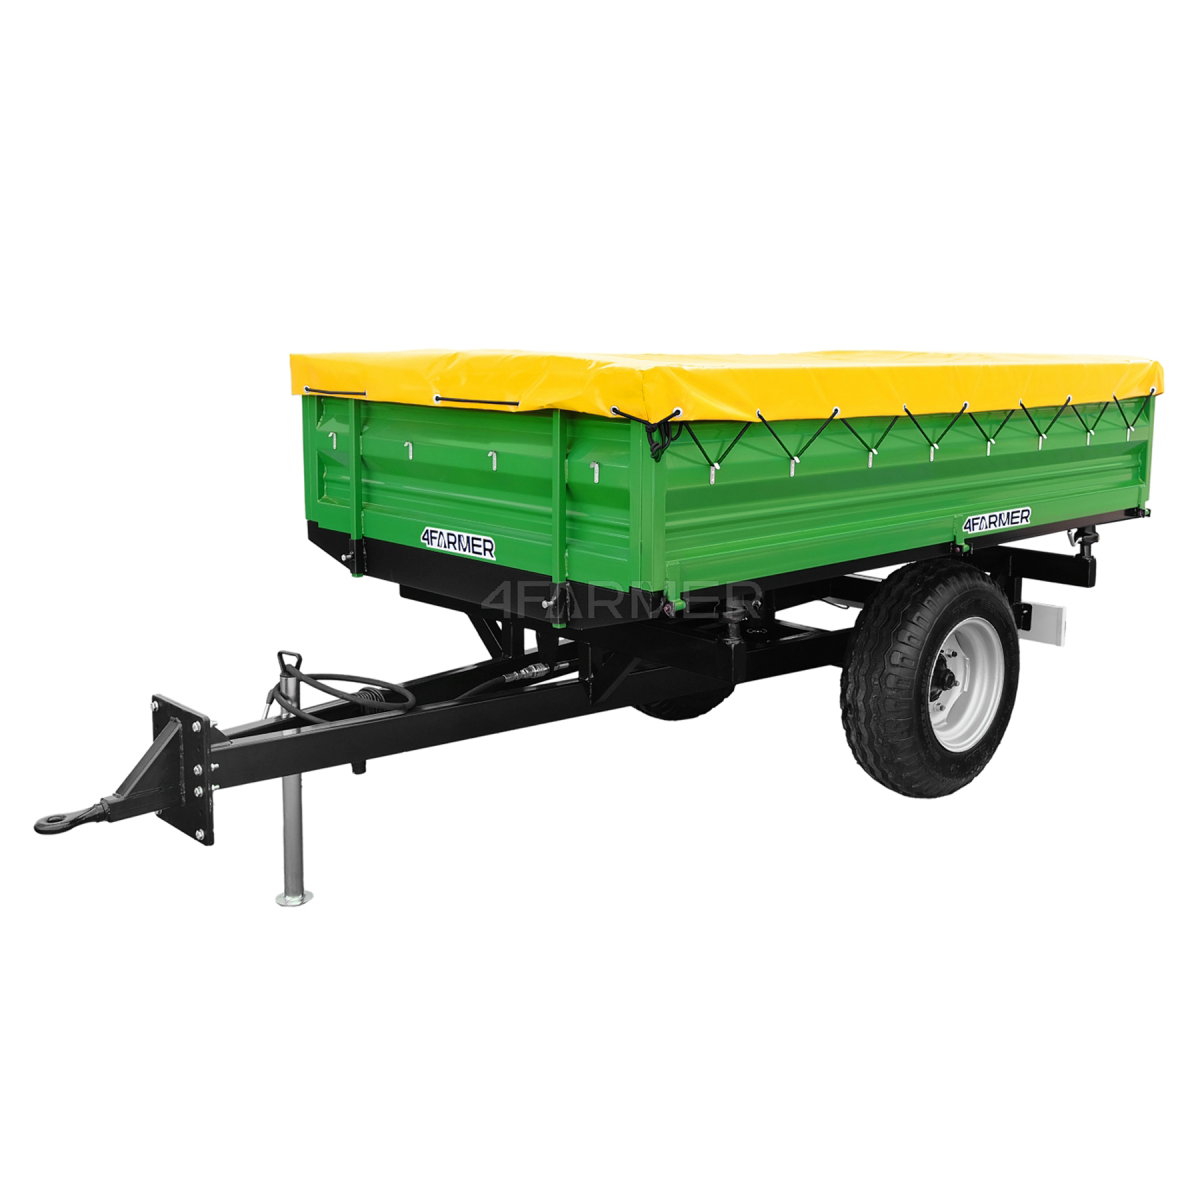 Single-axle agricultural trailer 2T with kiper + 4FARMER tarpaulin